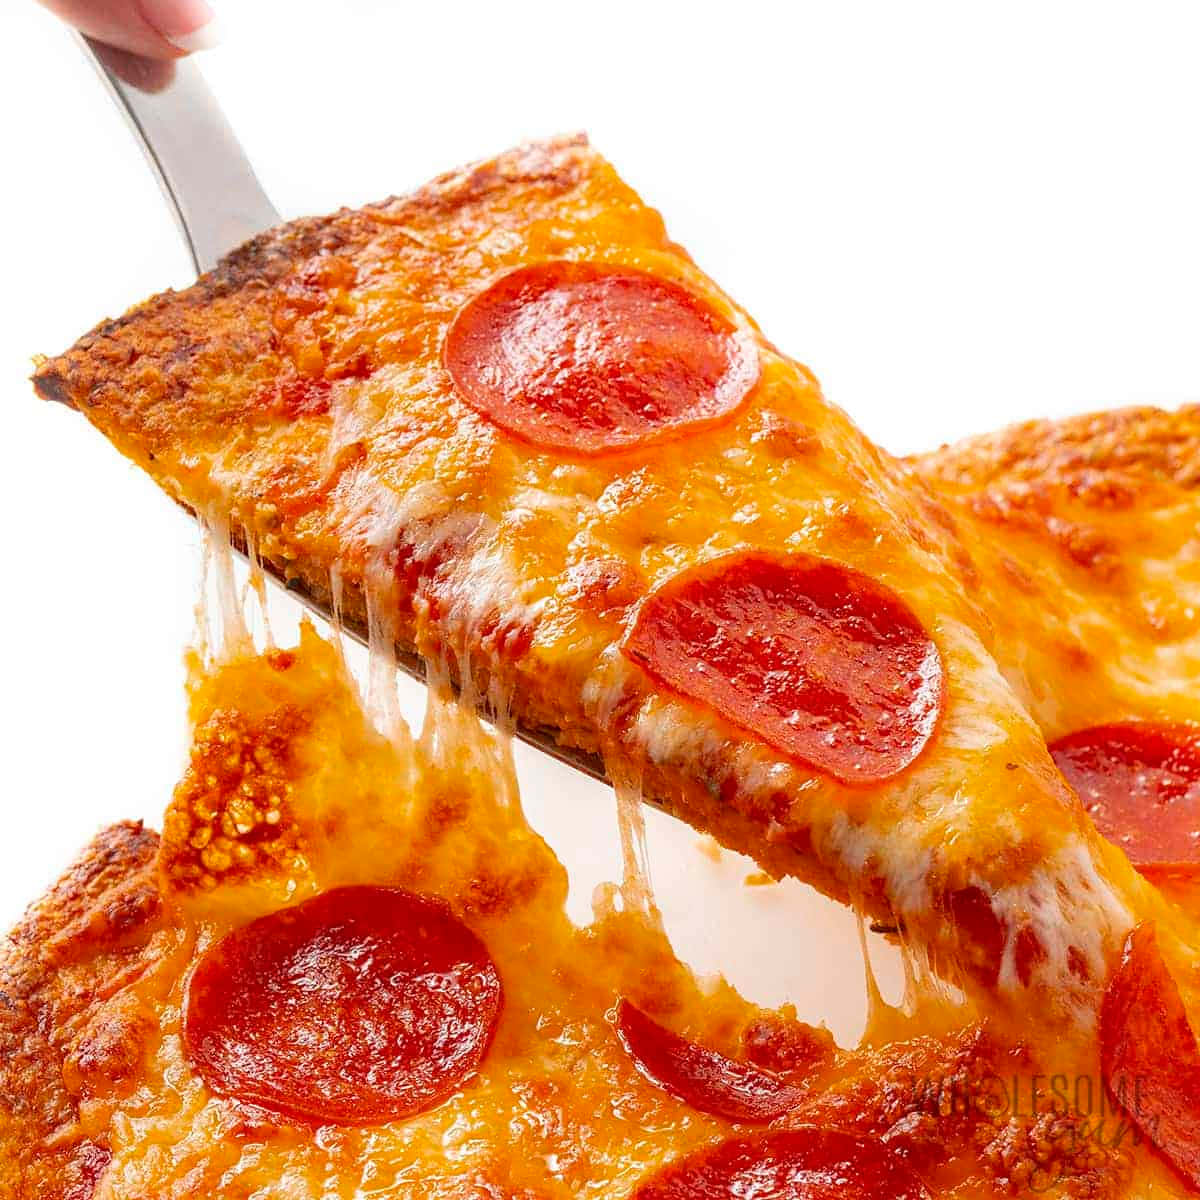 Imagende Una Rebanada De Pizza De Pepperoni